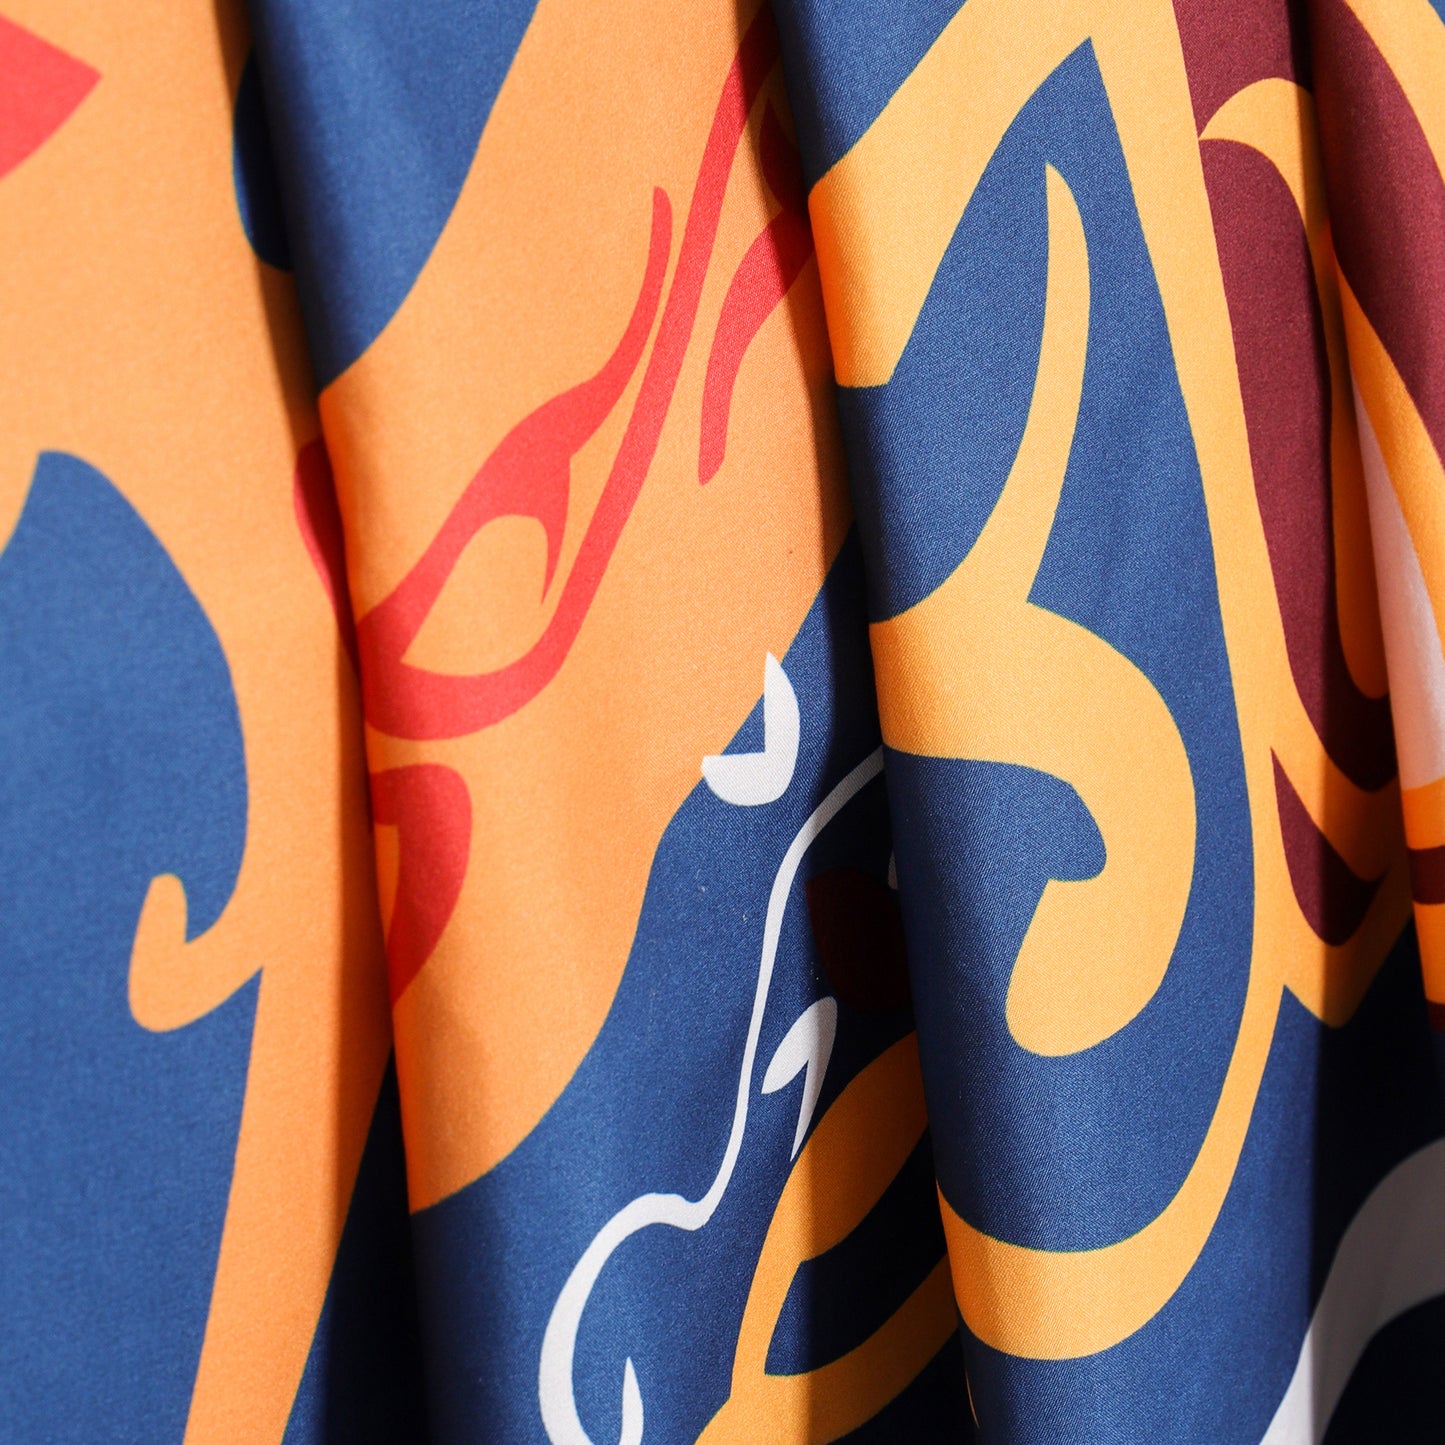 6  Piece Bed Sheet set.-orange and blue